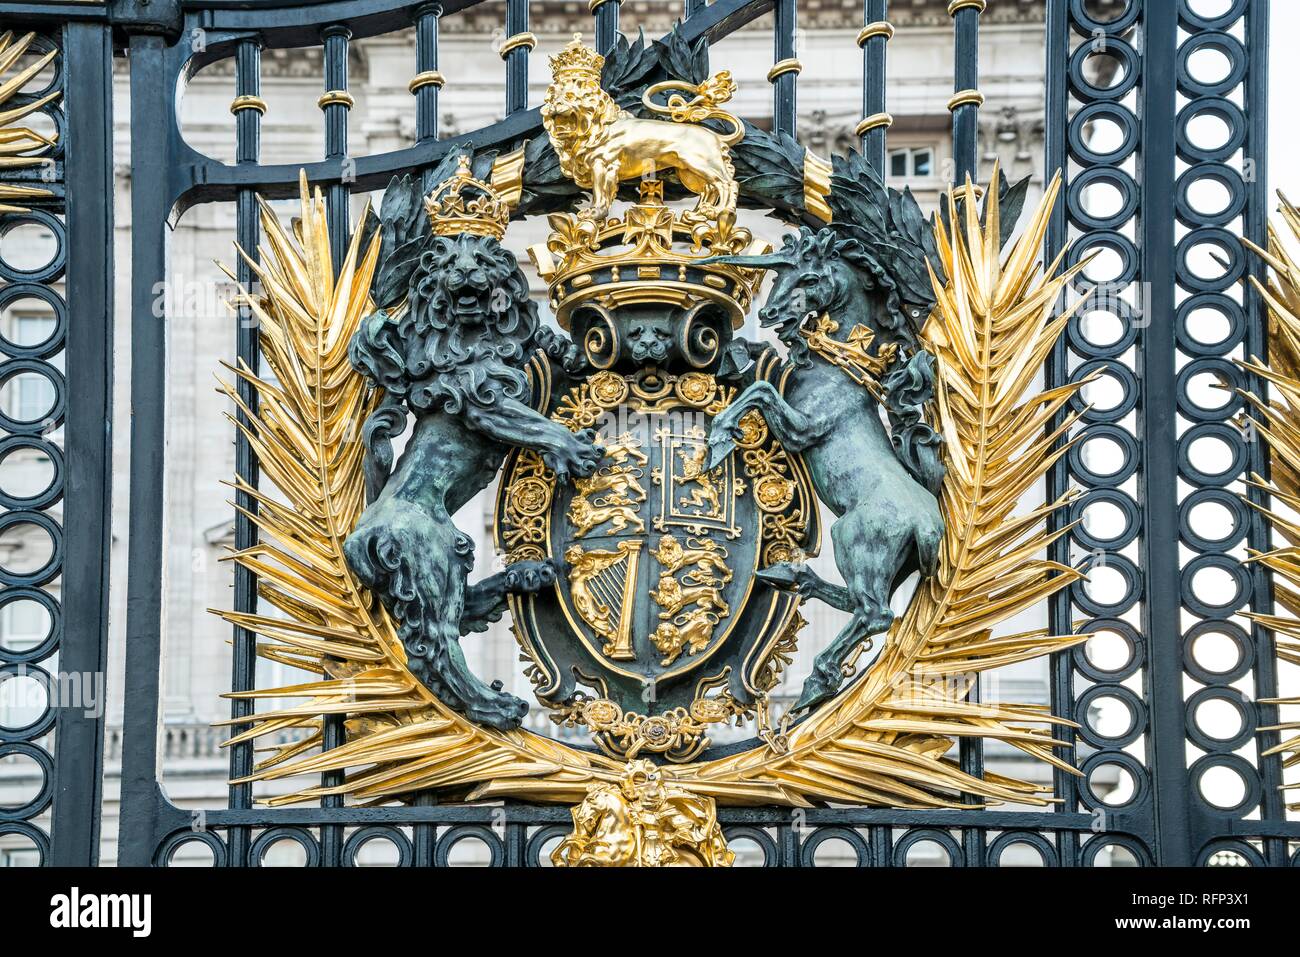 Emblem at Buckingham Palace, London, Great Britain Stock Photo